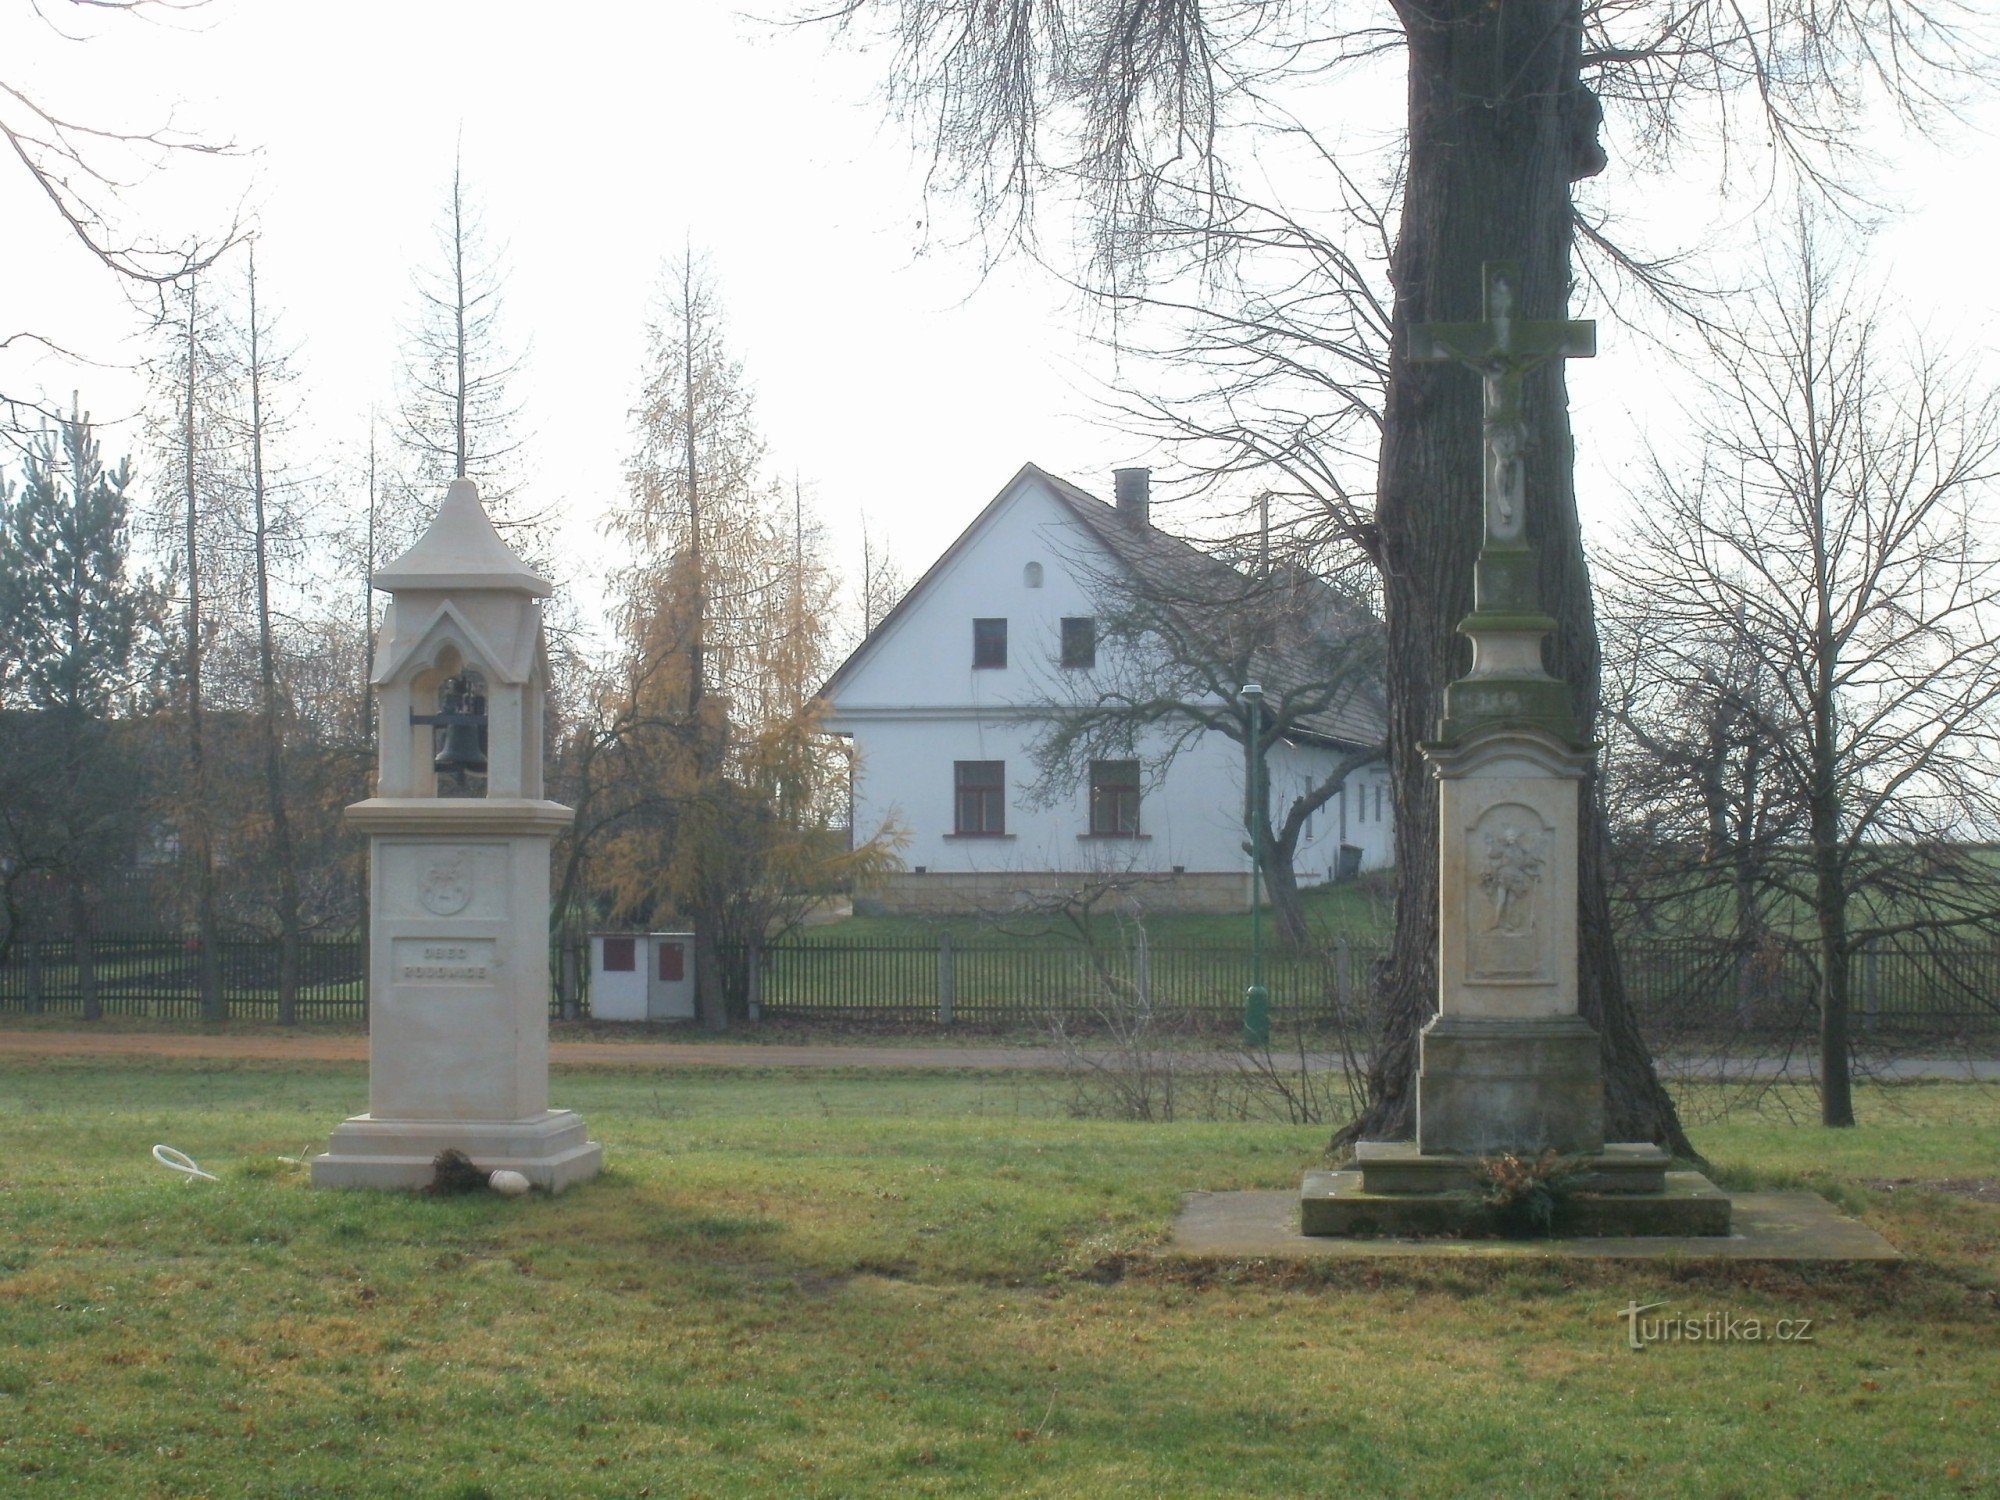 Roudnice - korsfästelsemonument med klocktorn